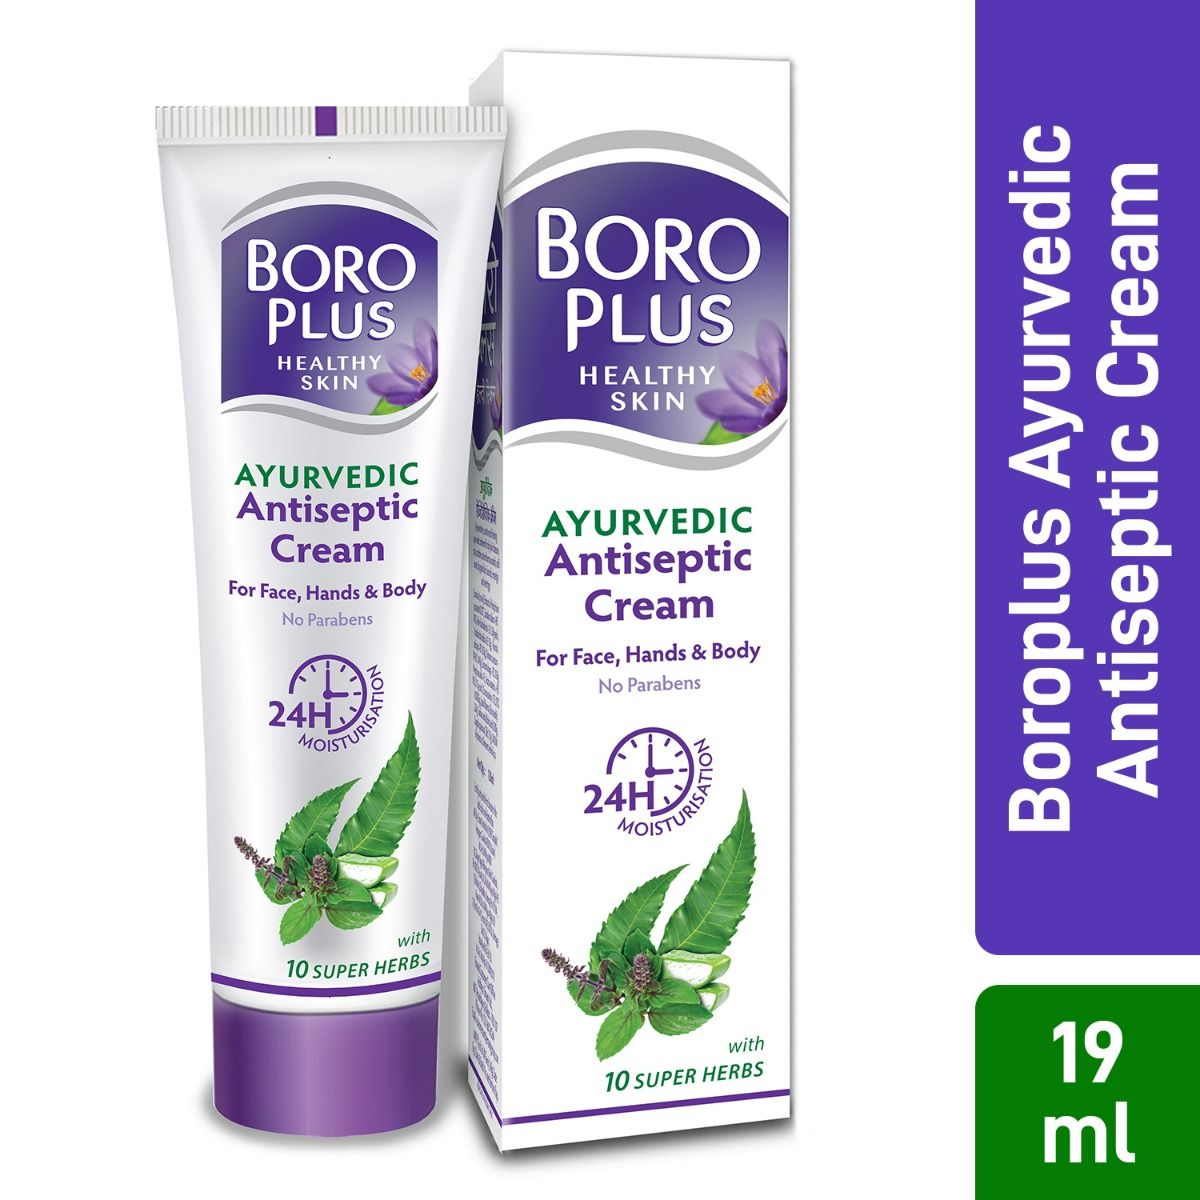 Buy Boroplus Ayurvedic Antiseptic Cream, 19 ml Online